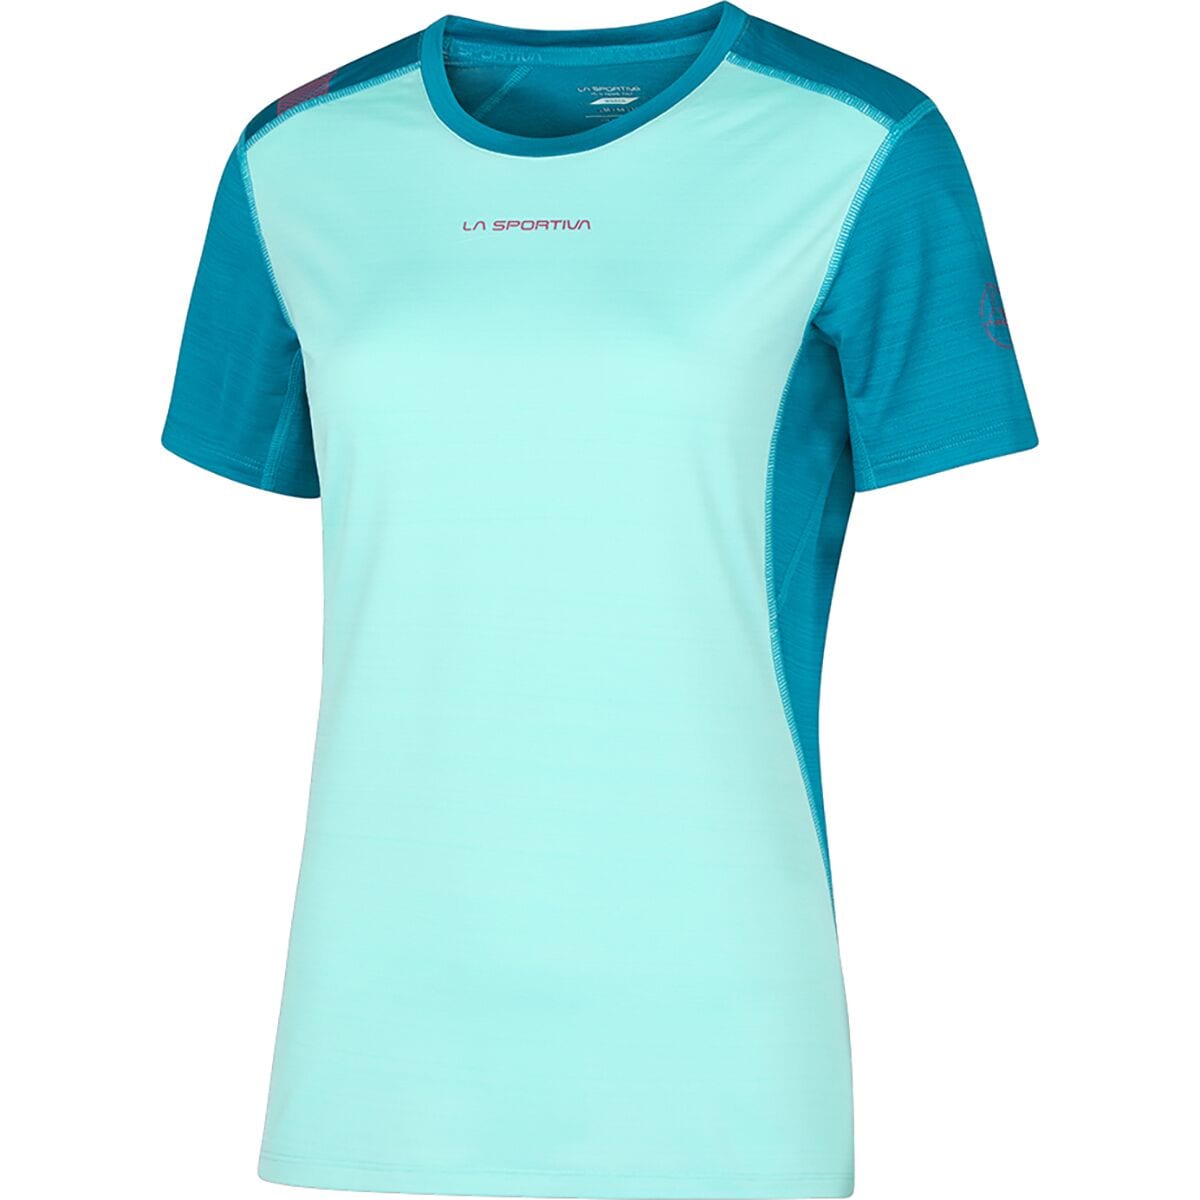 La Sportiva Sunfire T-Shirt - Women's